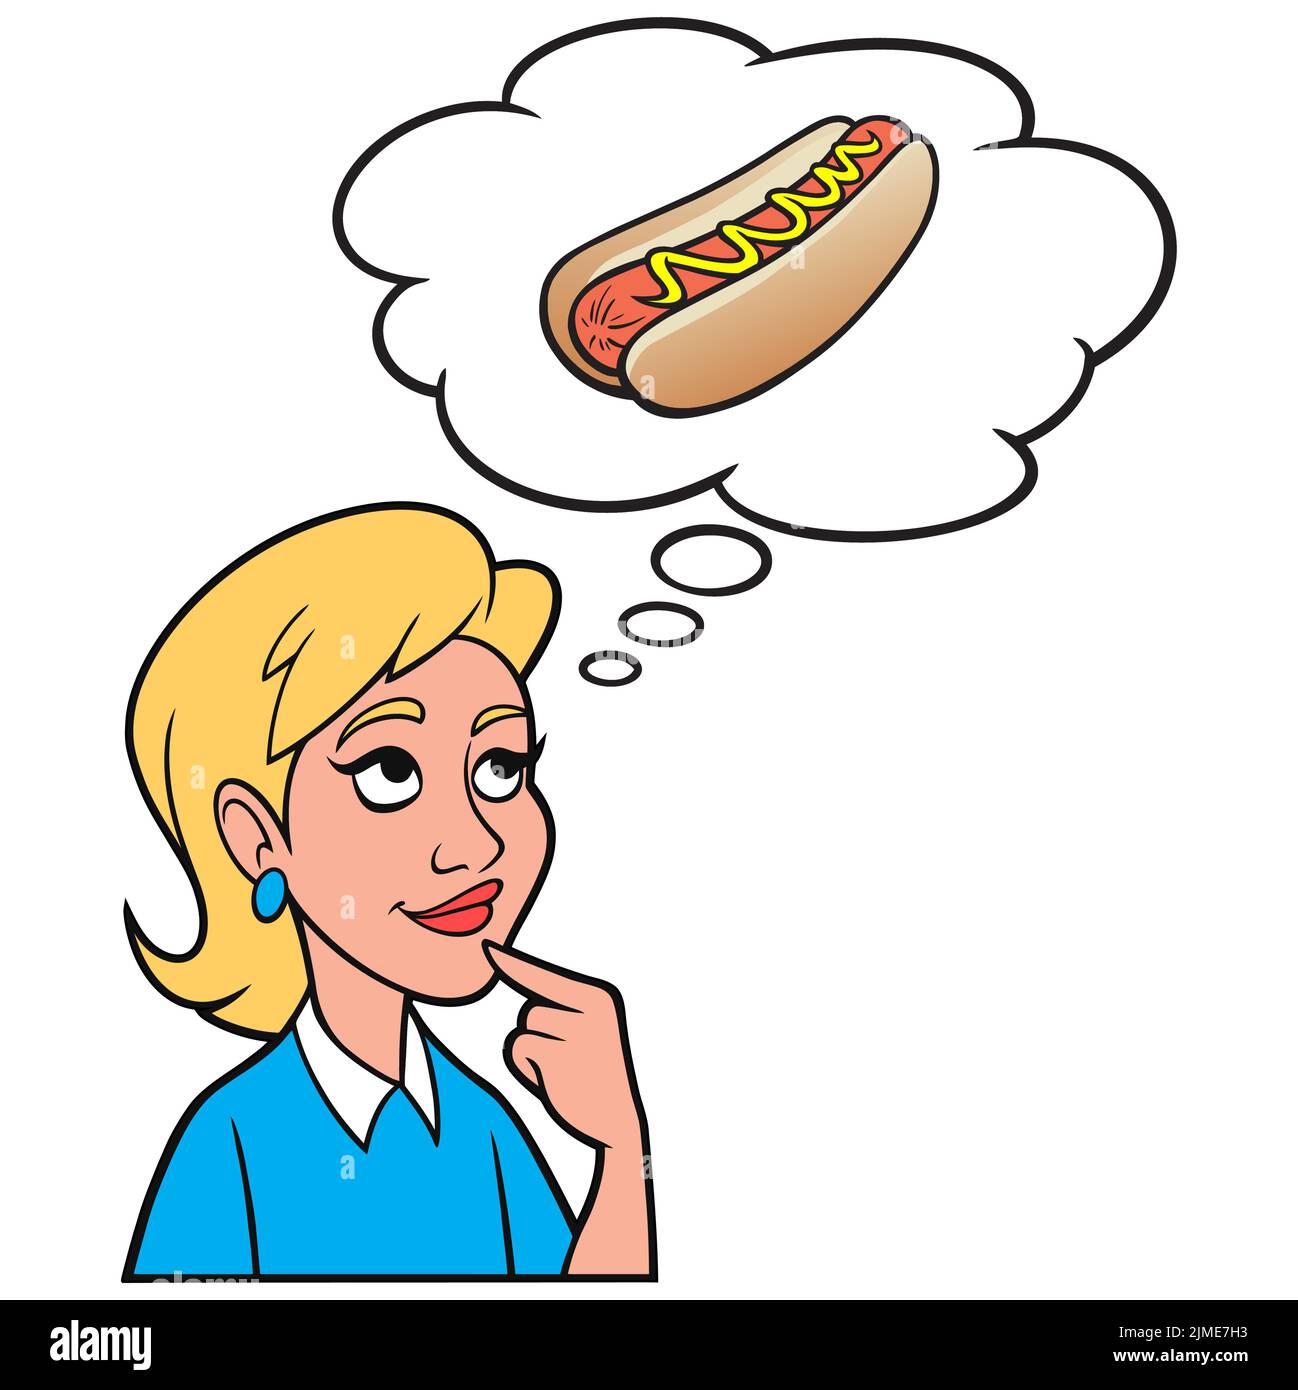 Girl thinking about a Hotdog - A cartoon illustration of a Girl thinking about a Hotdog for lunch. Stock Vector